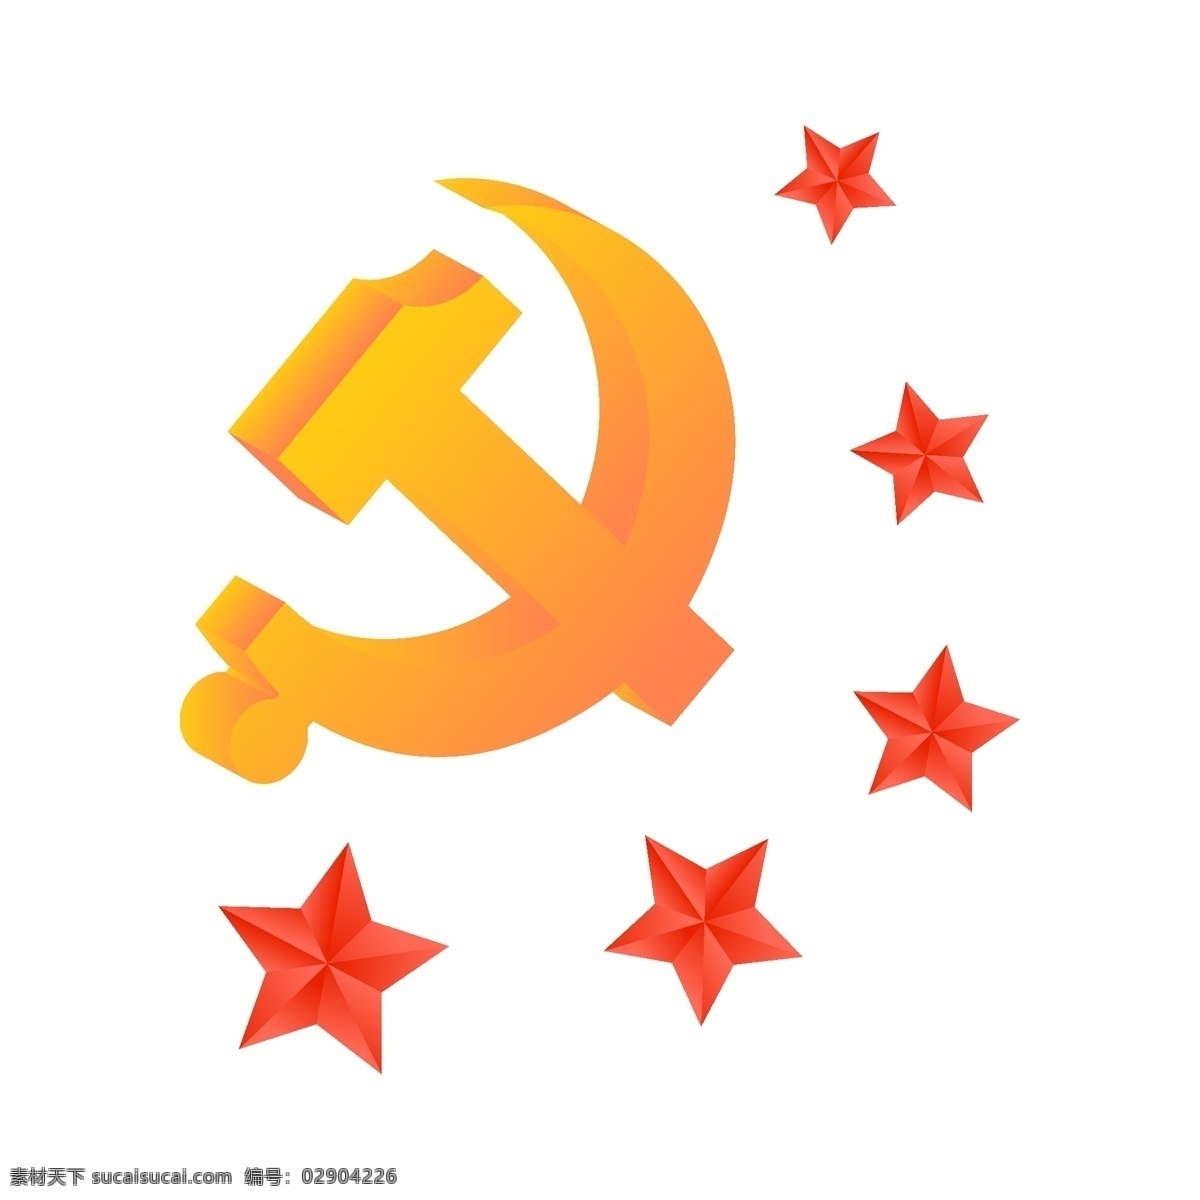 d 中国共产党 五角星 围绕 立体 矢量 党徽 建党 共产党 红黄色 党庆